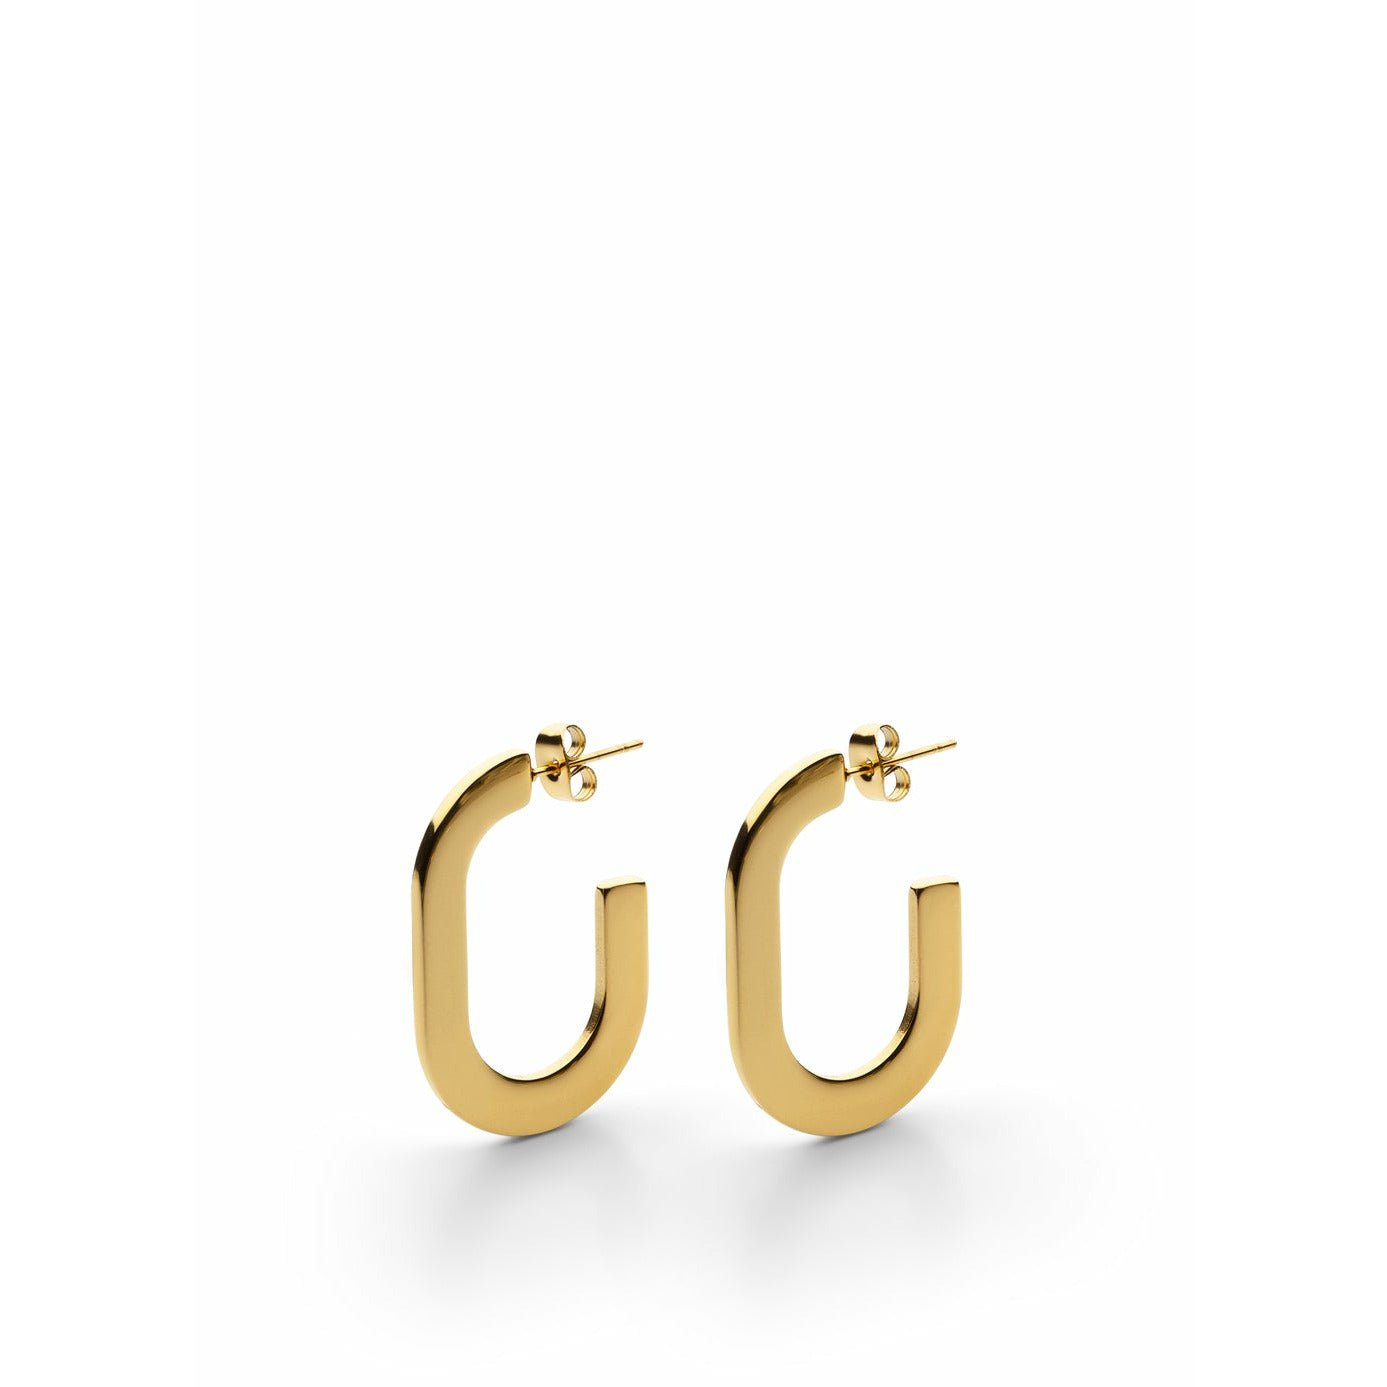 Skultuna Glam Earrings 316 L Steel Gold Plated, ø2,2 Cm